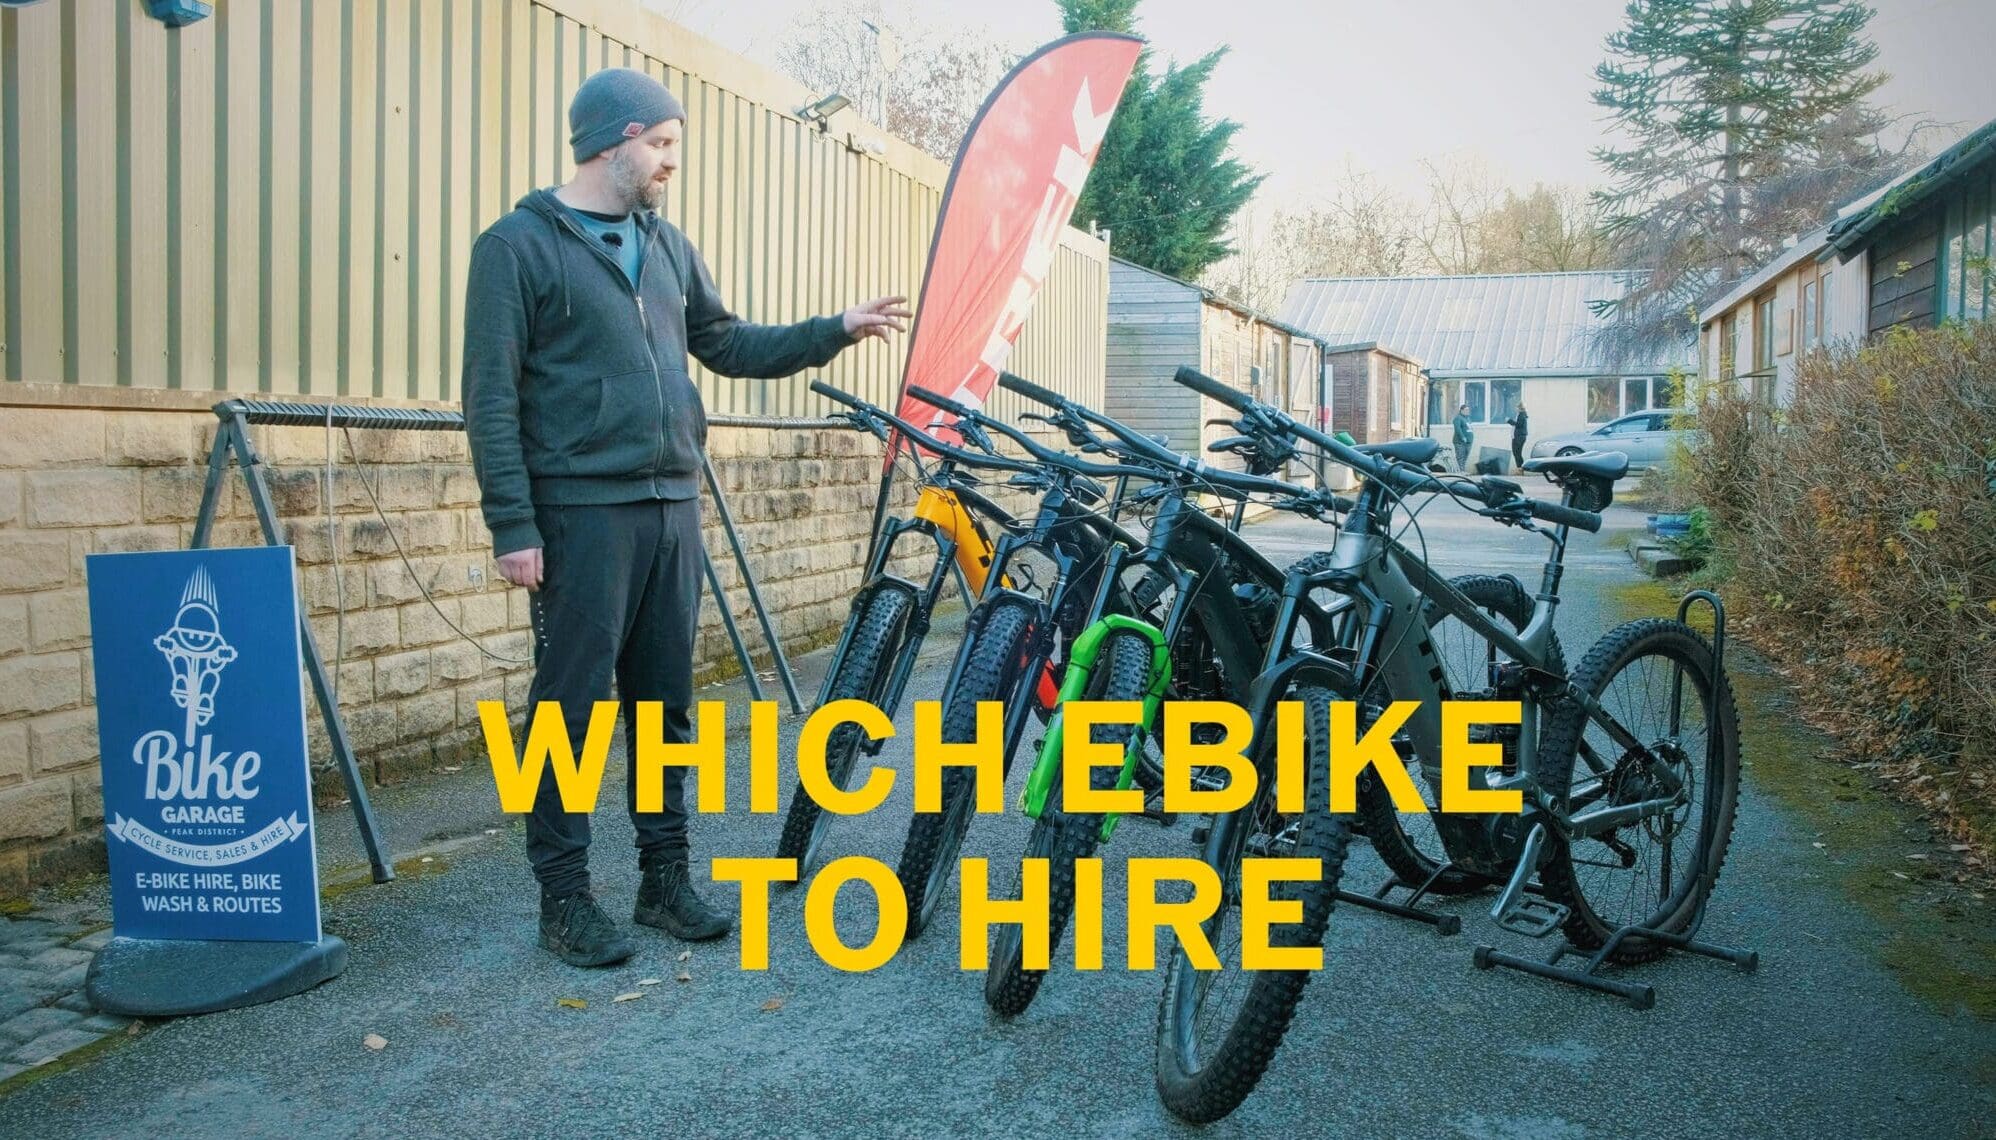 Bike Garage – Which Ebike to Hire